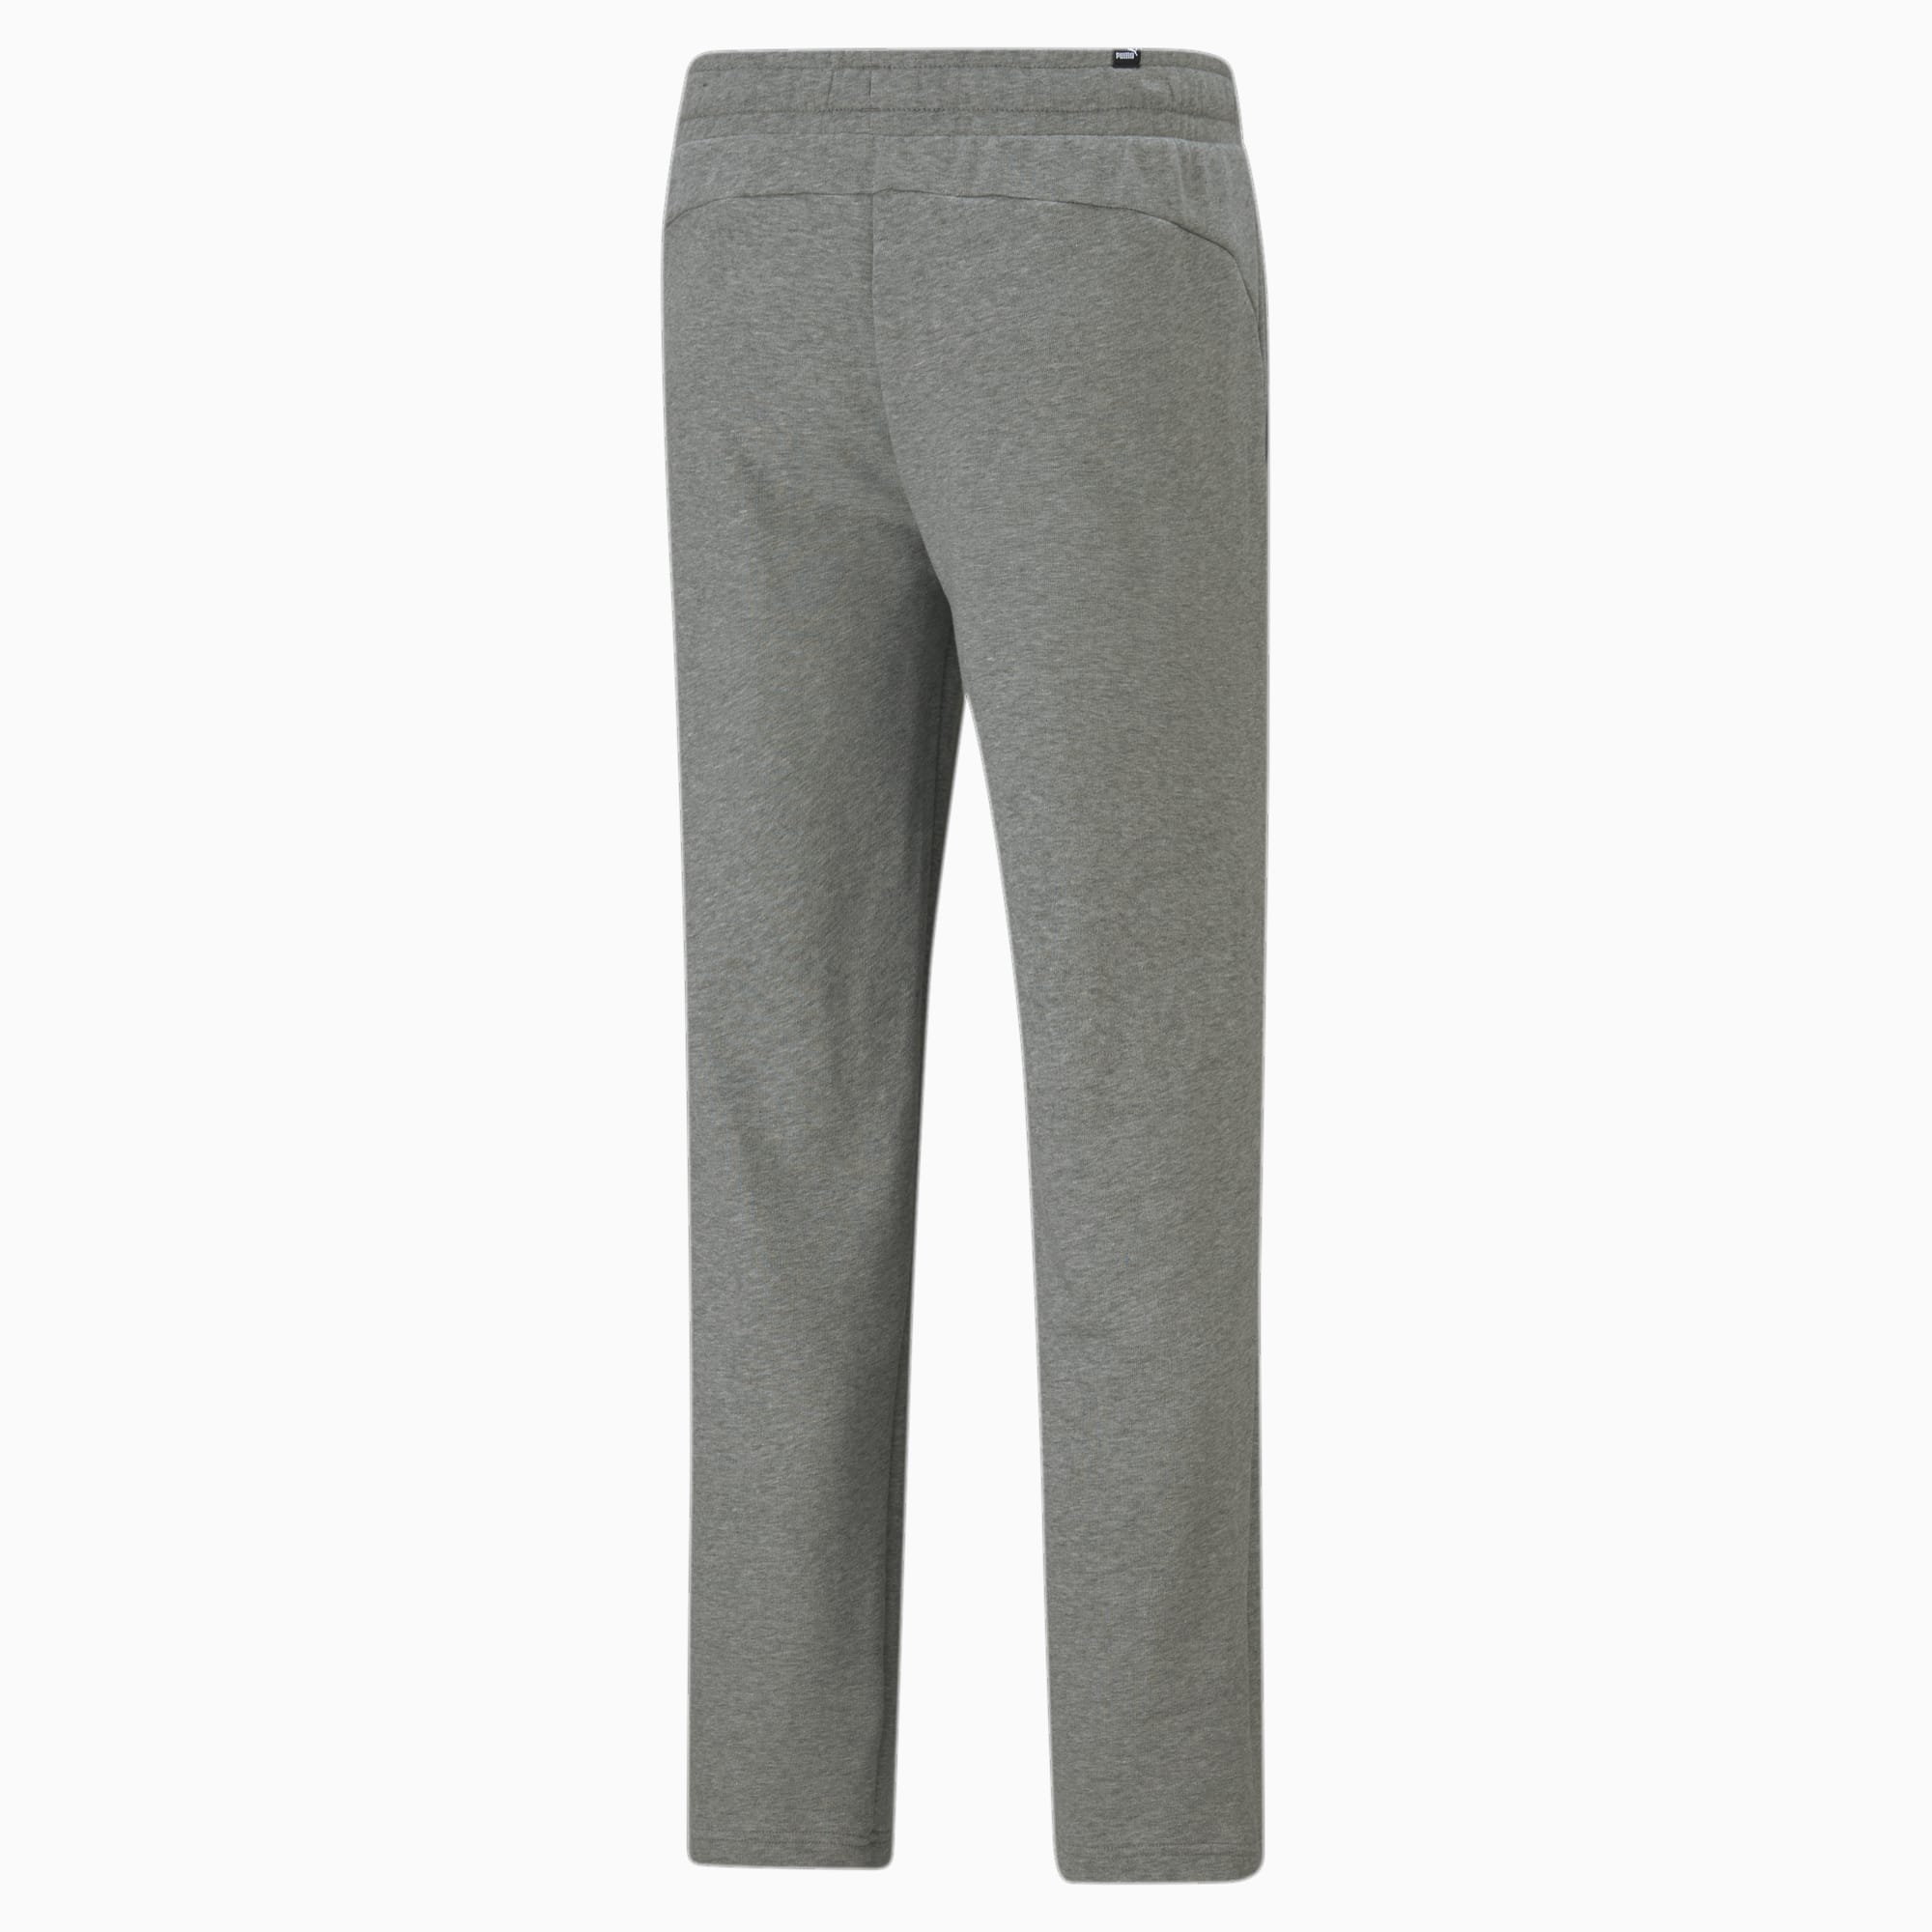 PUMA Essentials Logo Men's Sweatpants, Medium Grey Heather, Size XS, Clothing